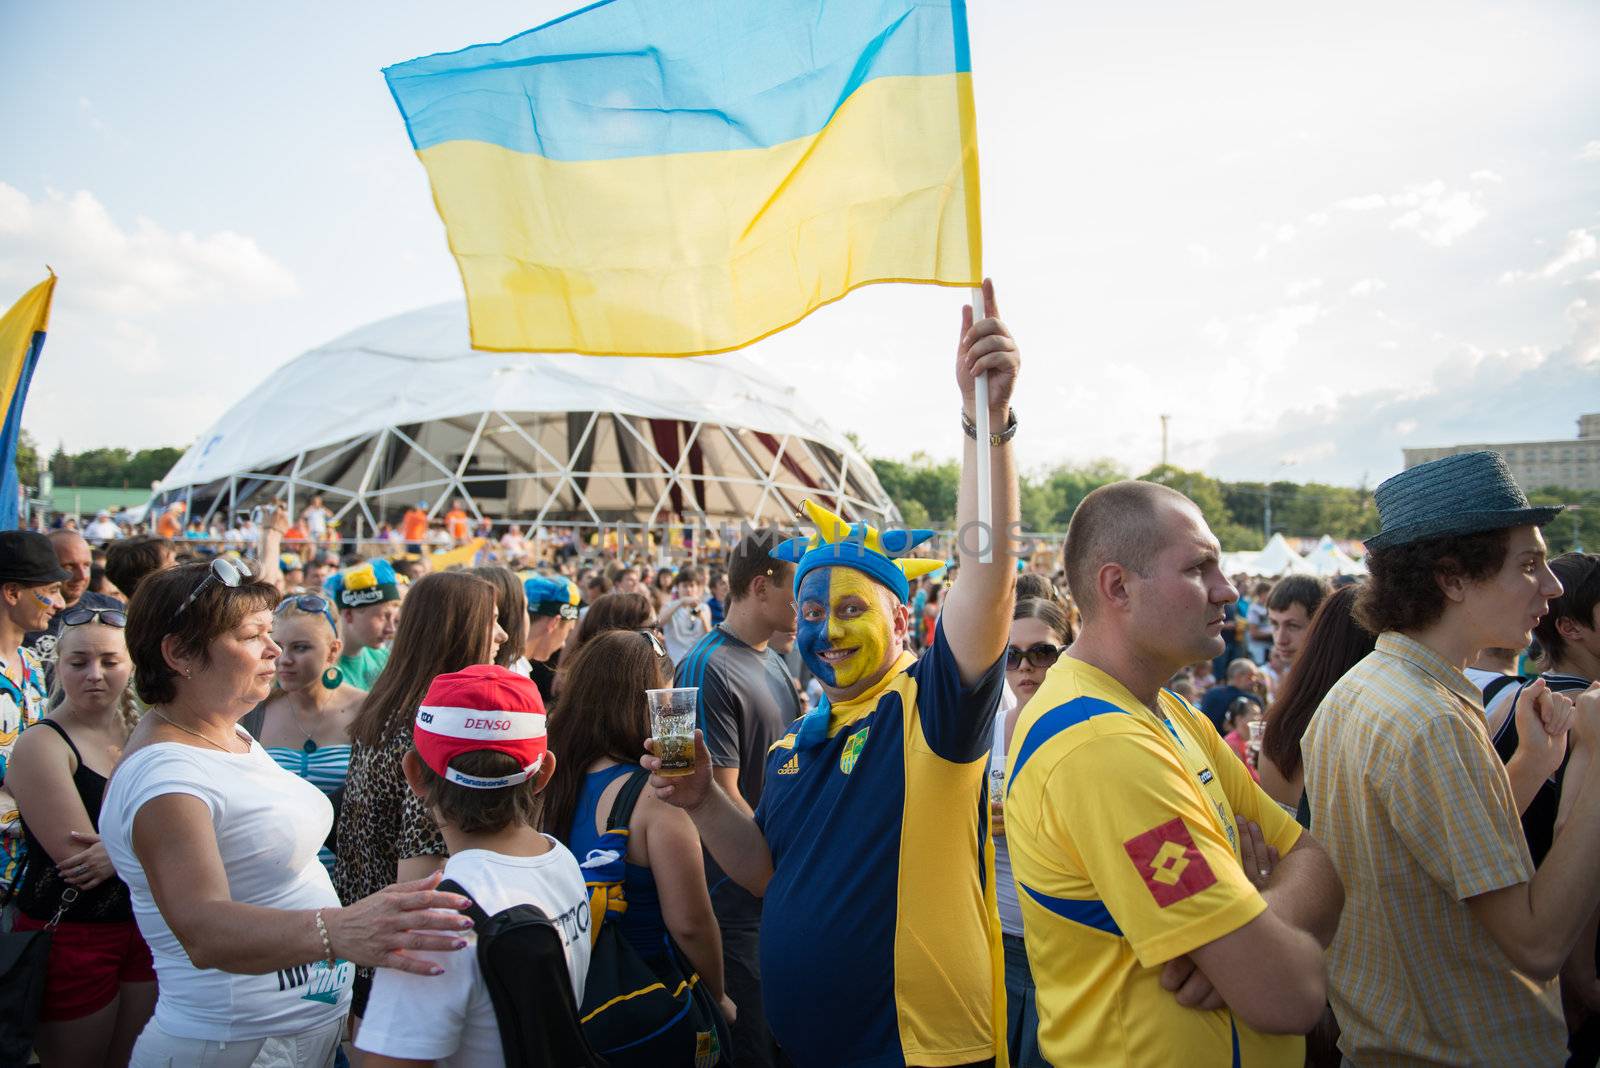 KHARKIV, UKRAINE - JUNE 08: Ukrainian football fan with a Ukrainian flag during football match Netherlands vs Denmark, June 08, 2012 in Kharkov, Ukraine